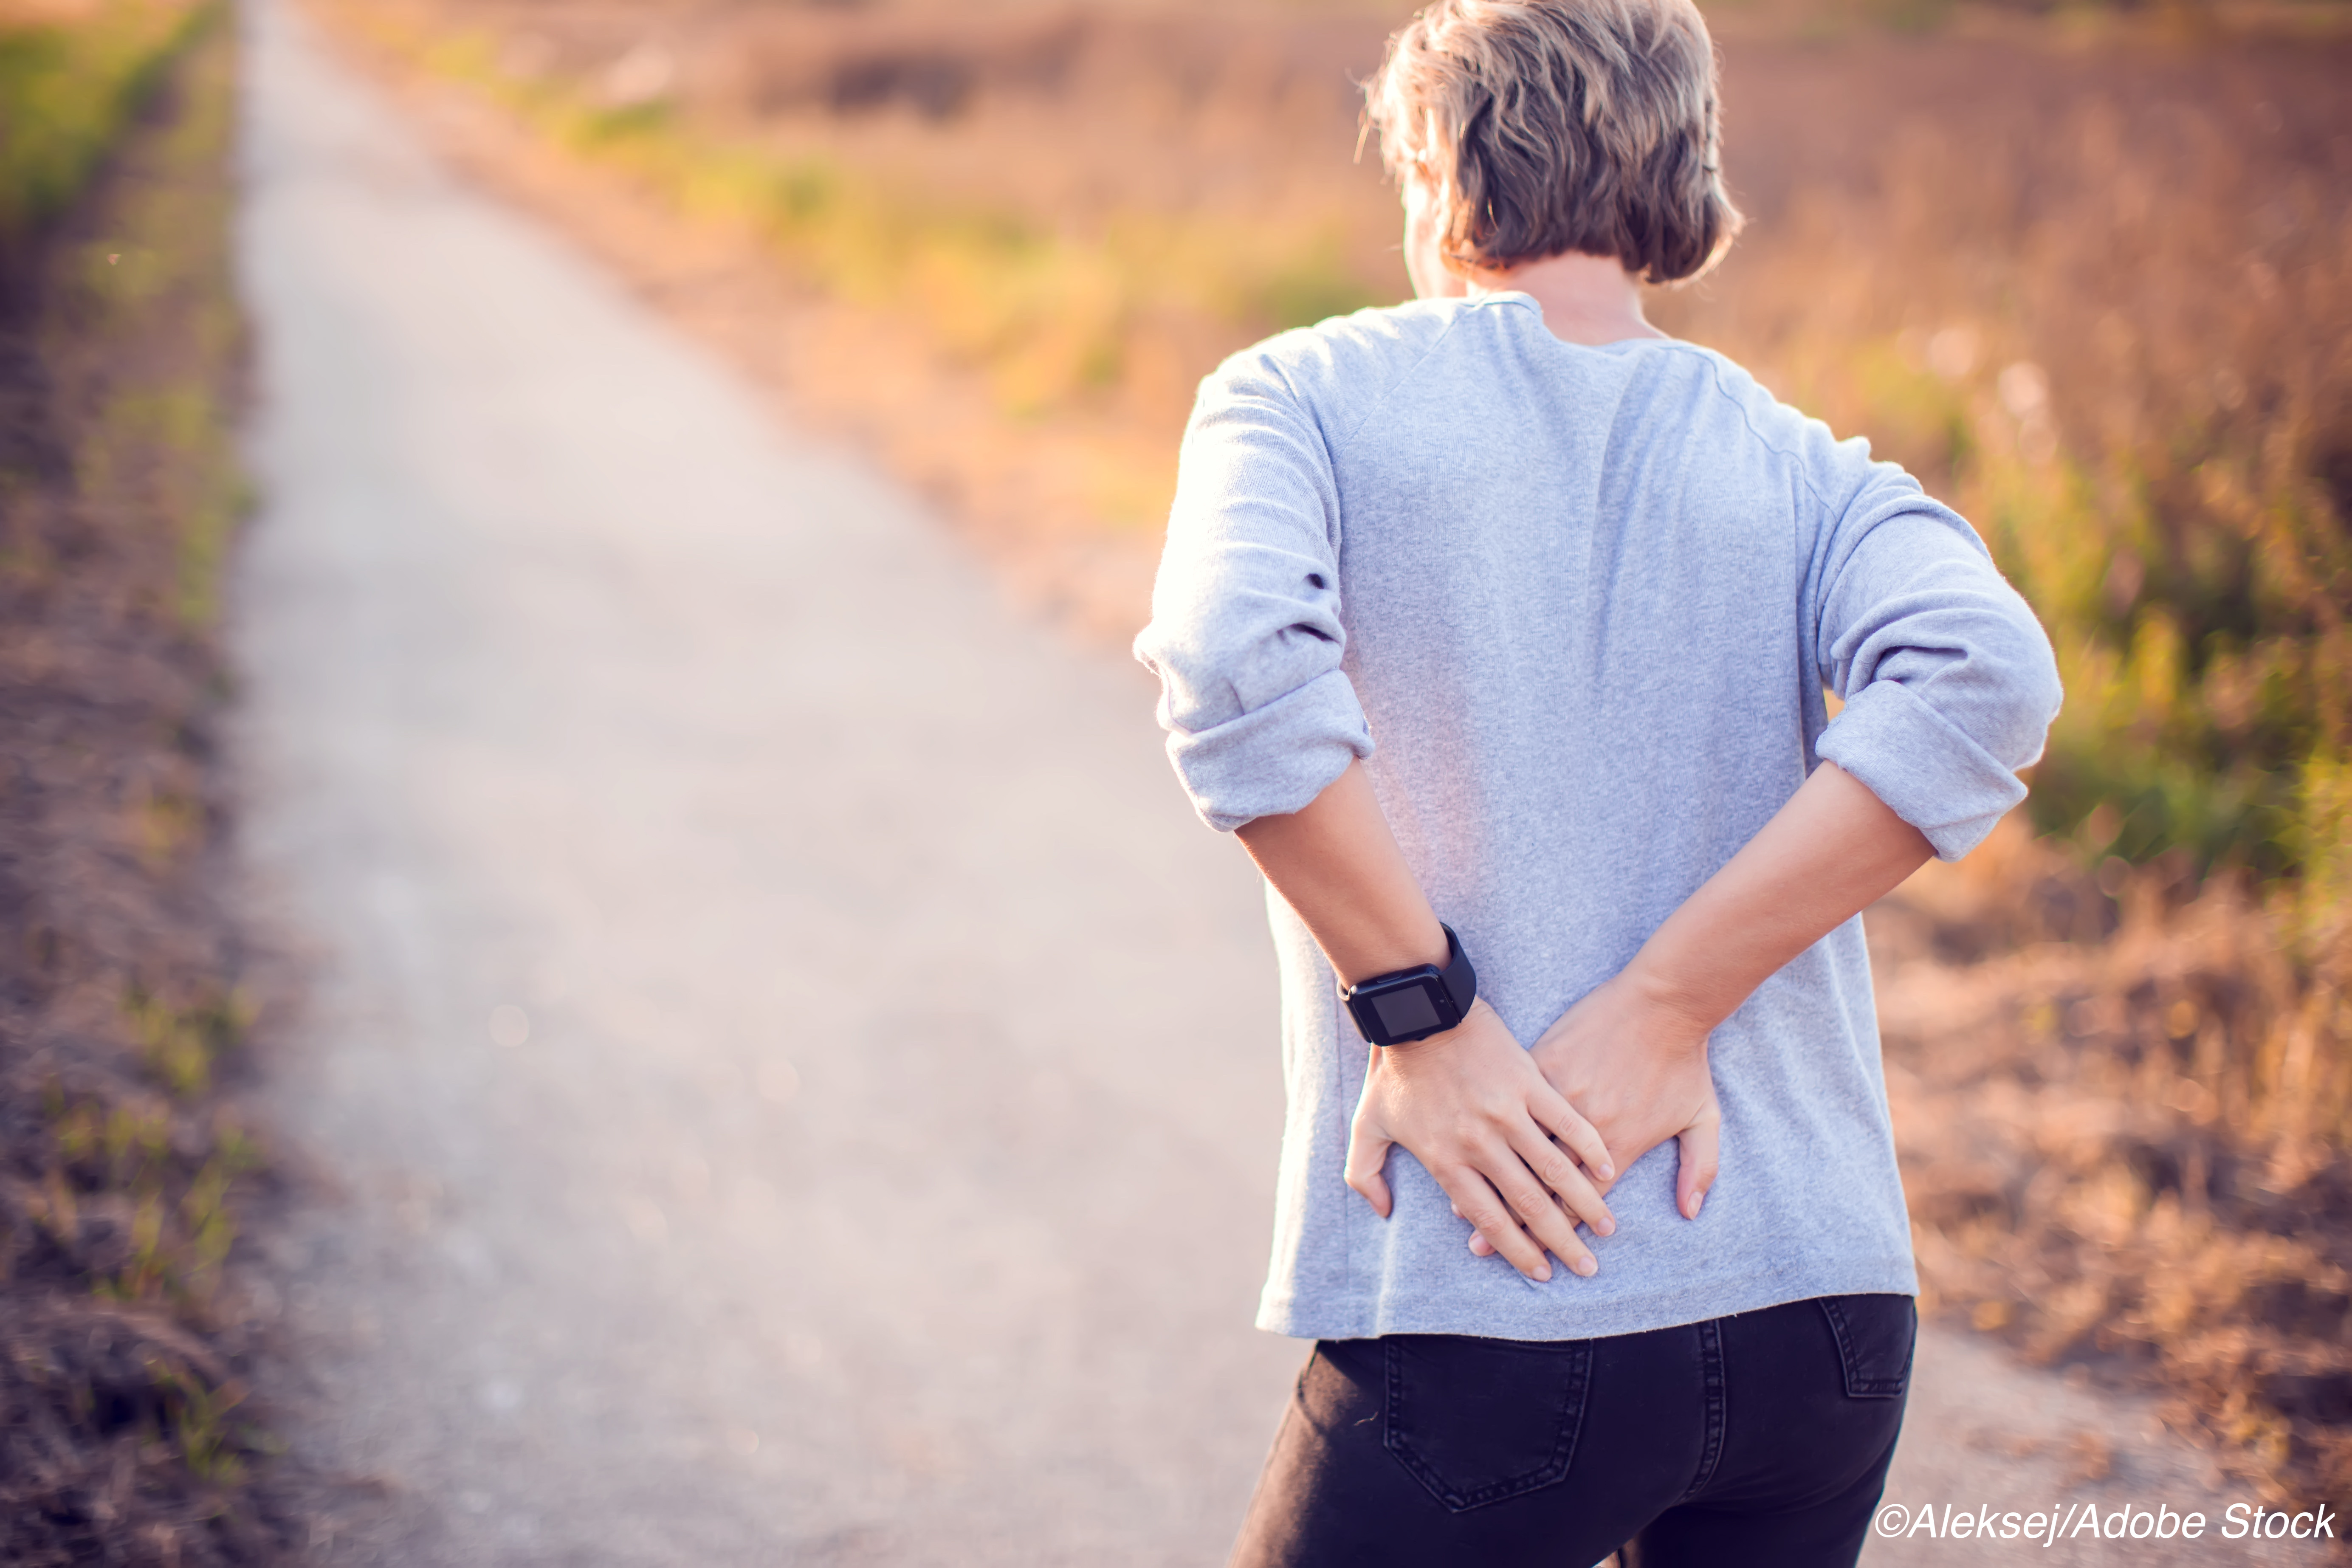 Antidepressants for Back Pain, Osteoarthritis: More Harm than Good?